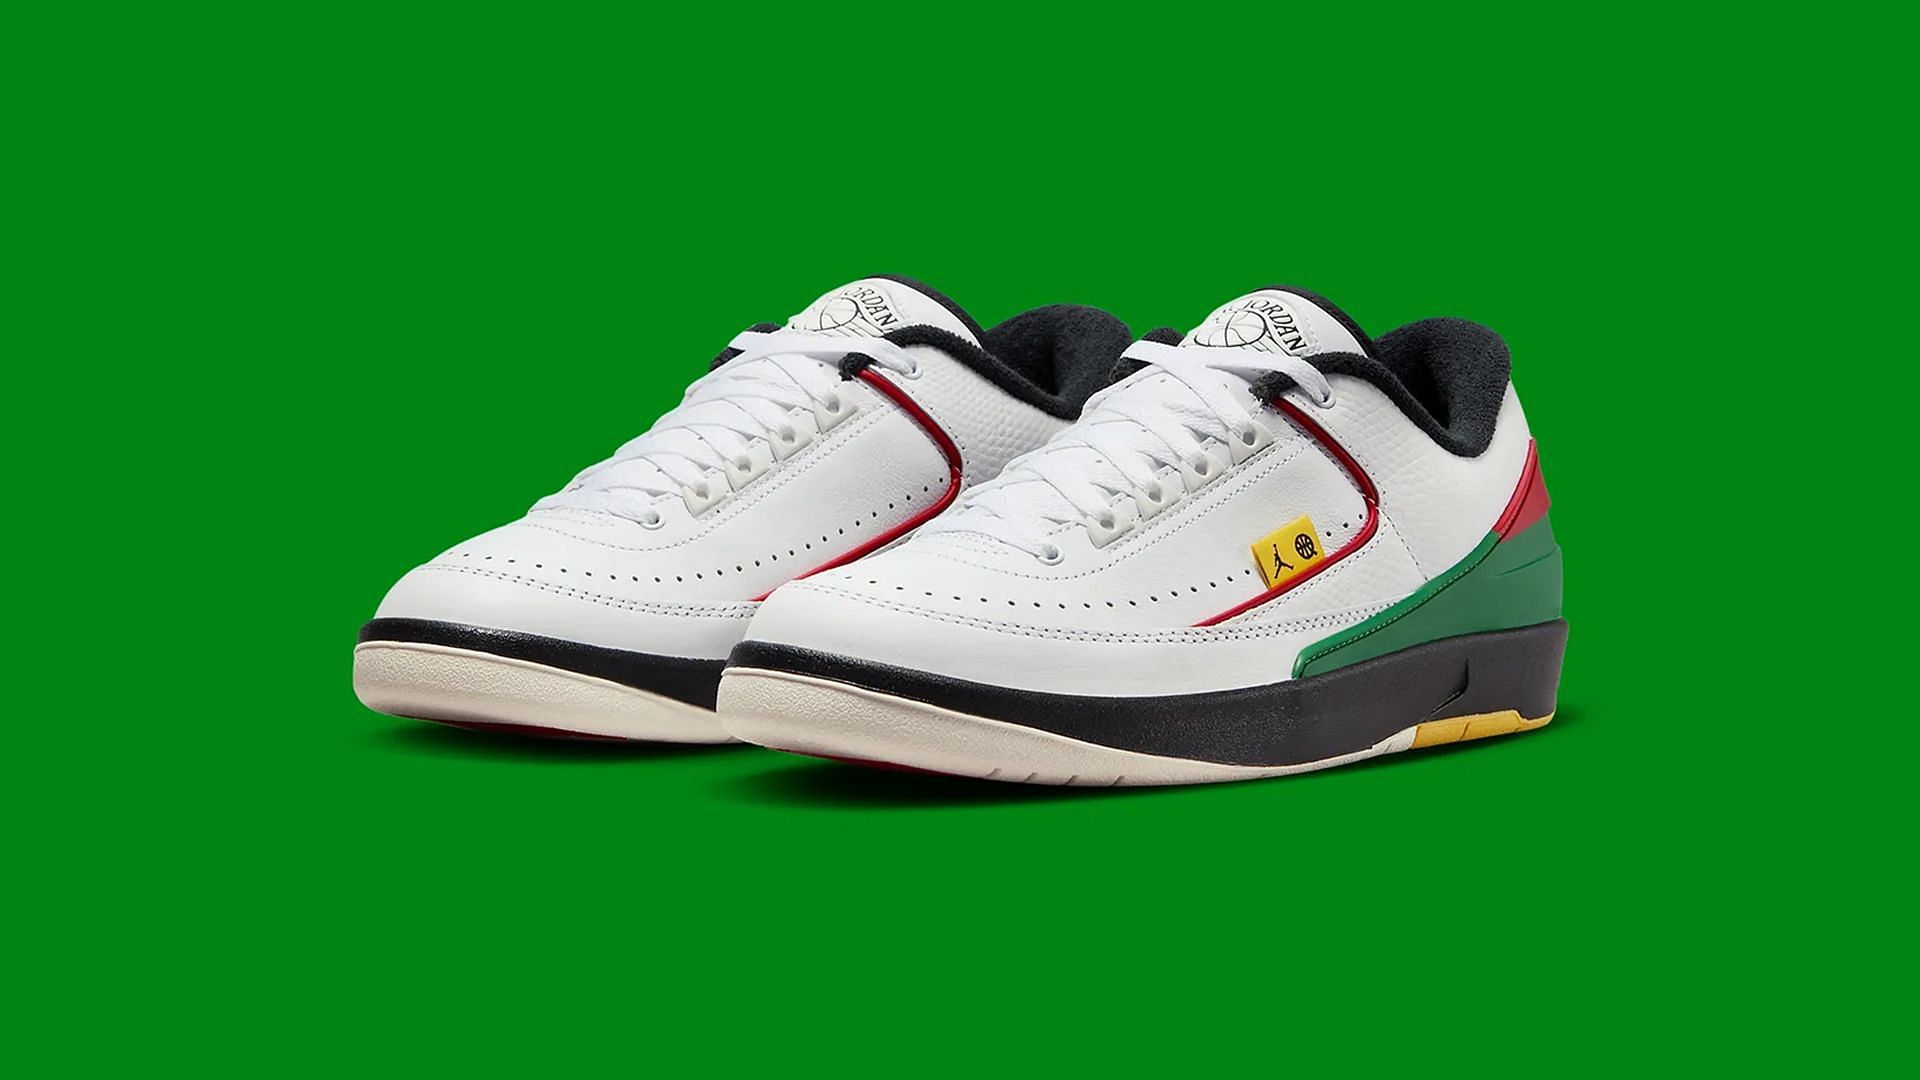 Air Jordan 2 Low &ldquo;QUAI 54&rdquo; (Image via official website of Nike)